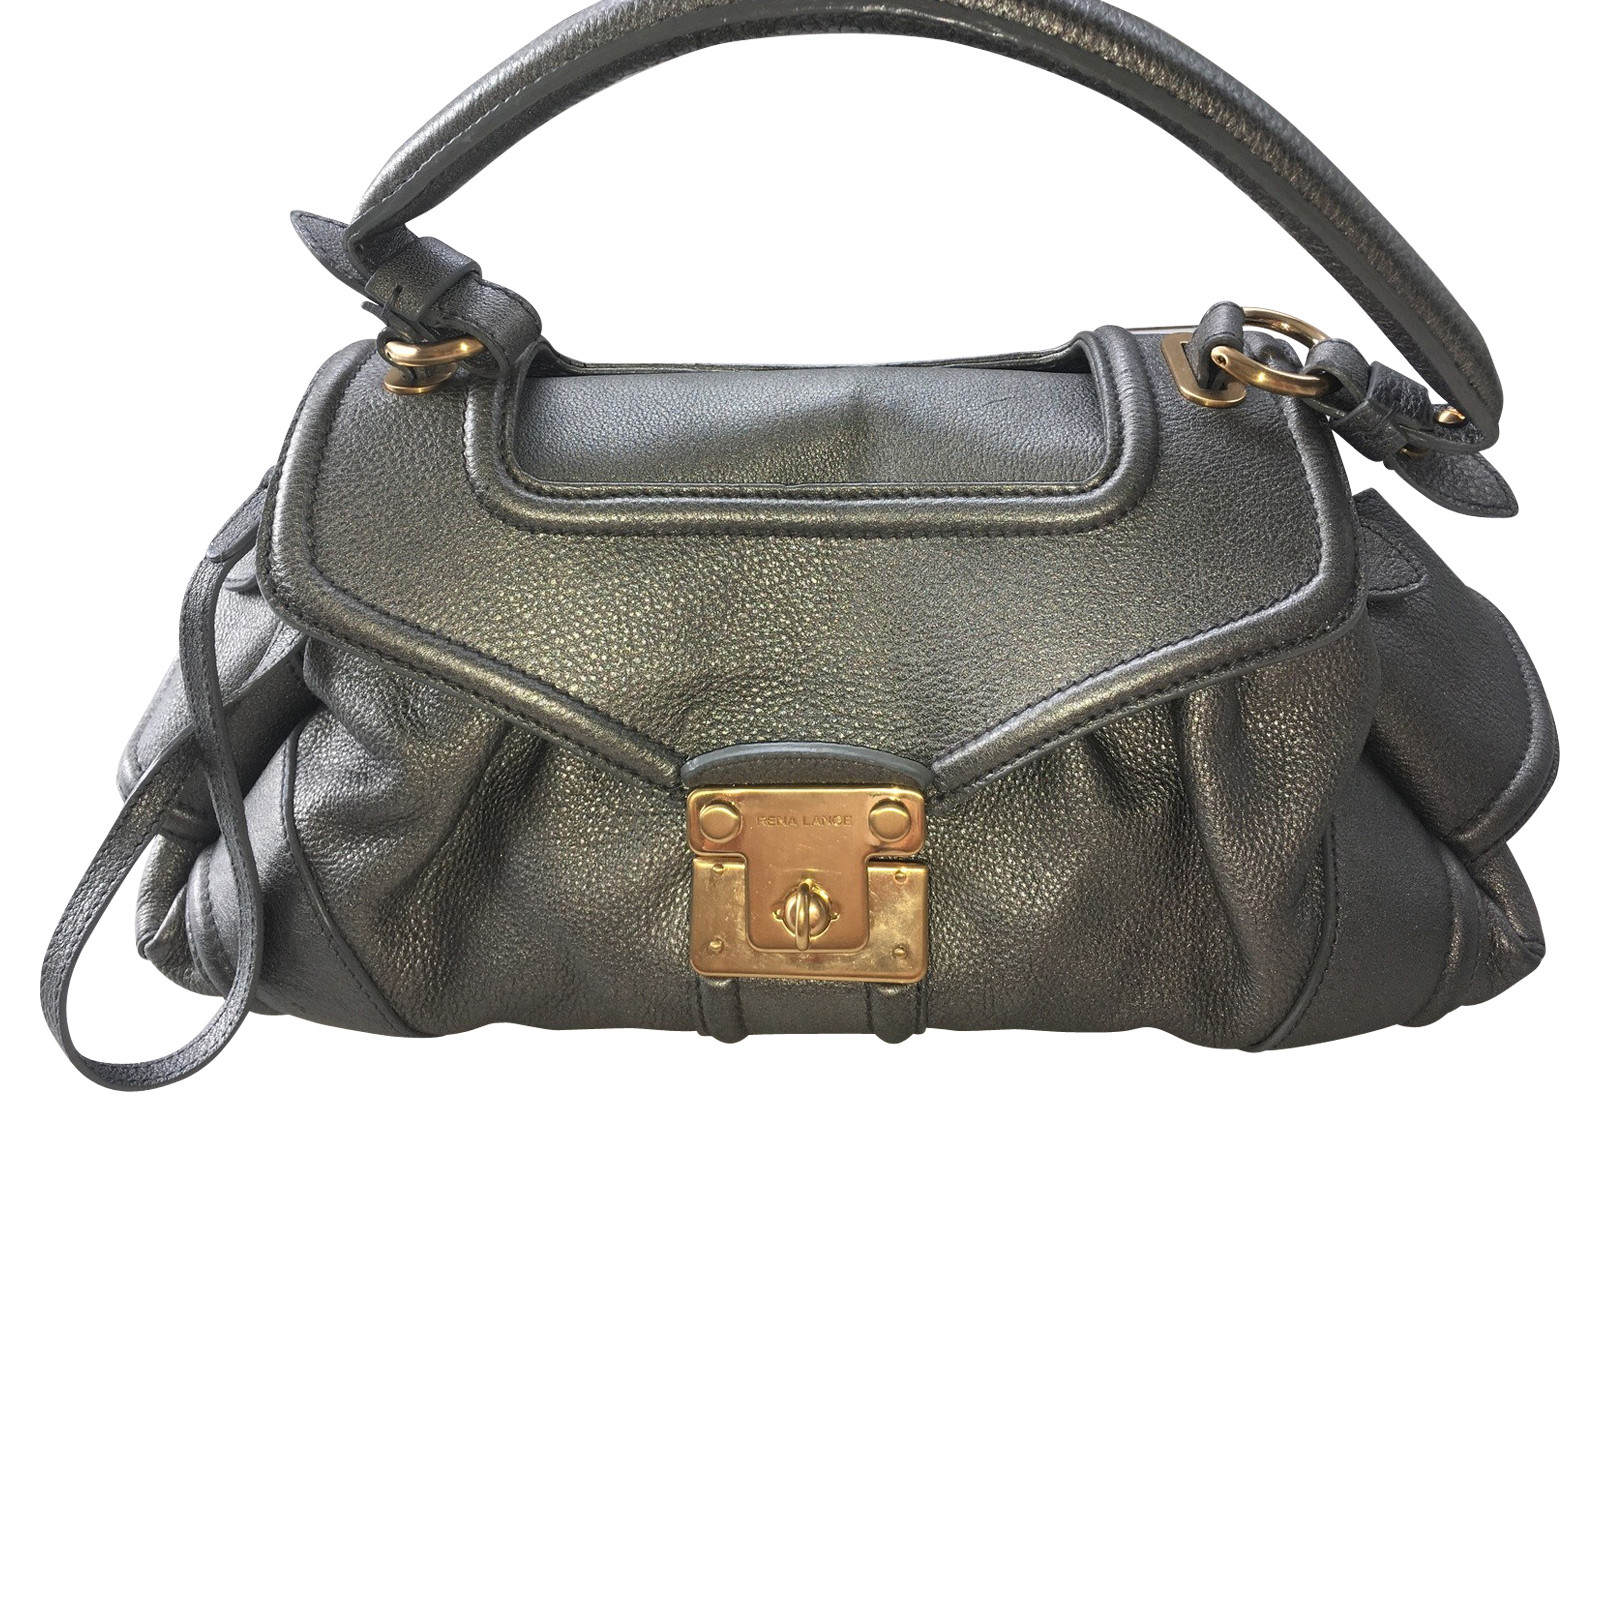 Rena Lange purse - Second Hand Rena Lange purse buy used for 99 